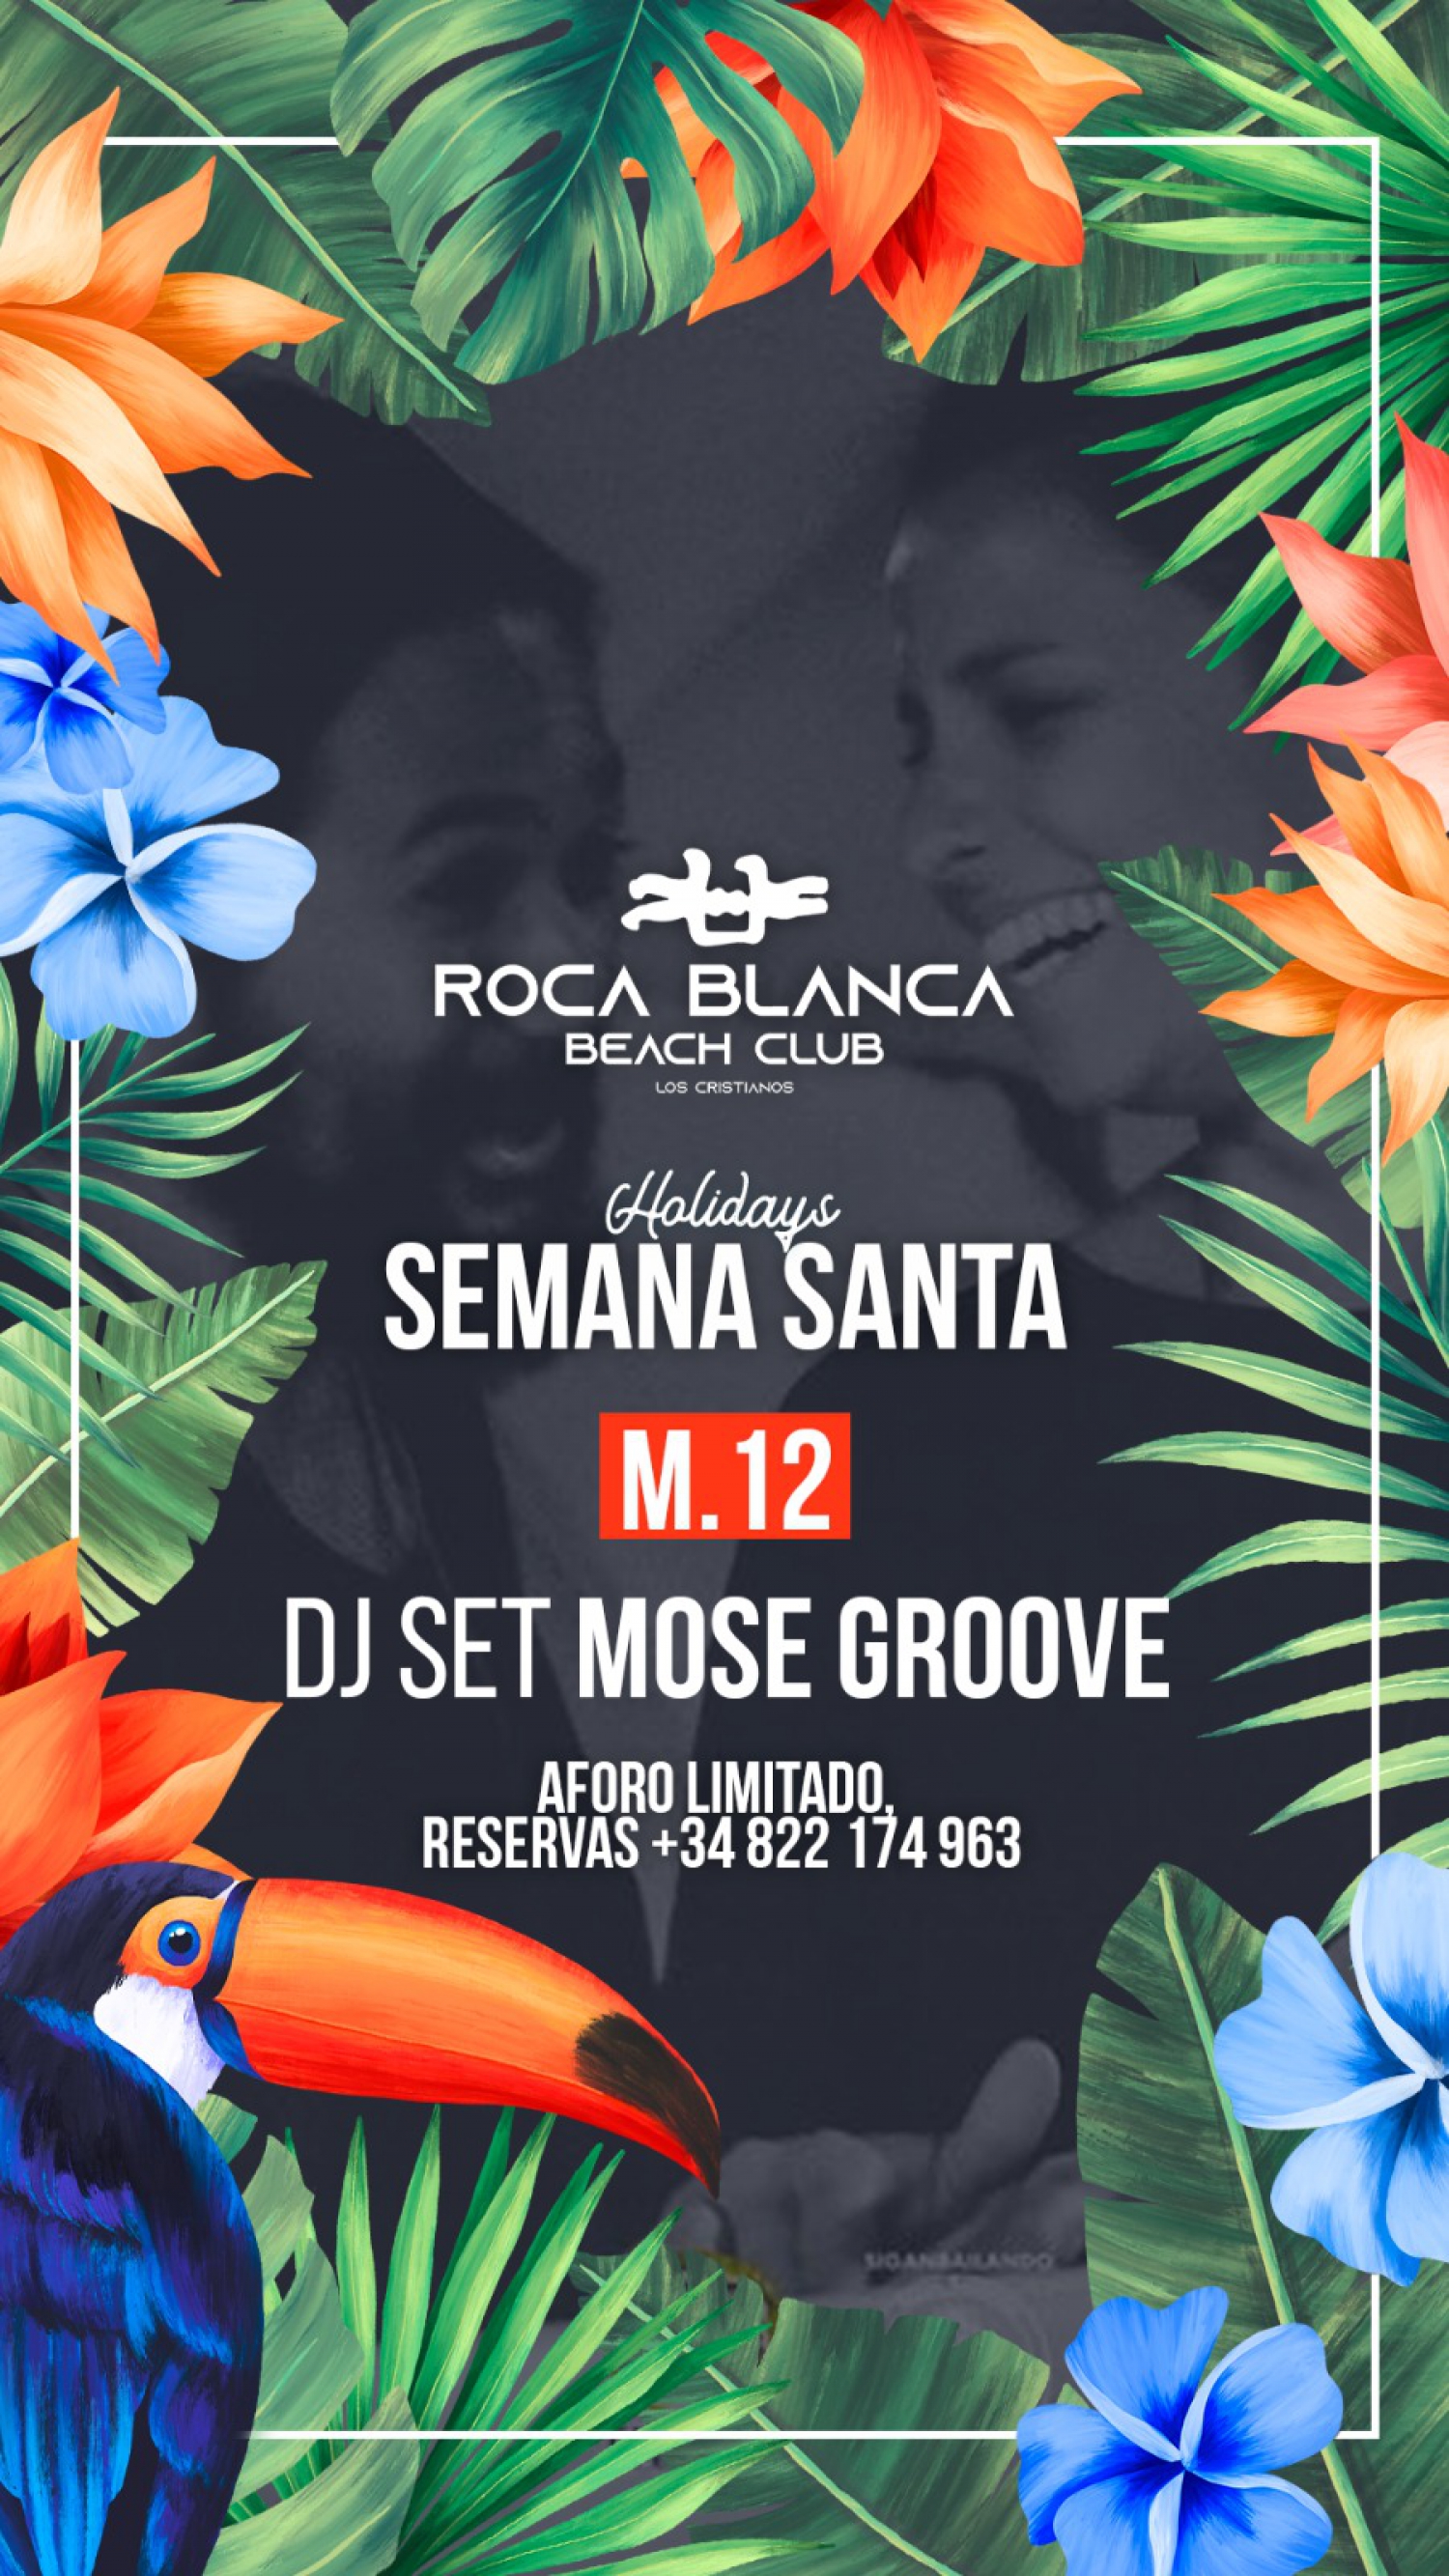 DJ set Mose Groove at Roca Blanca Beach Club